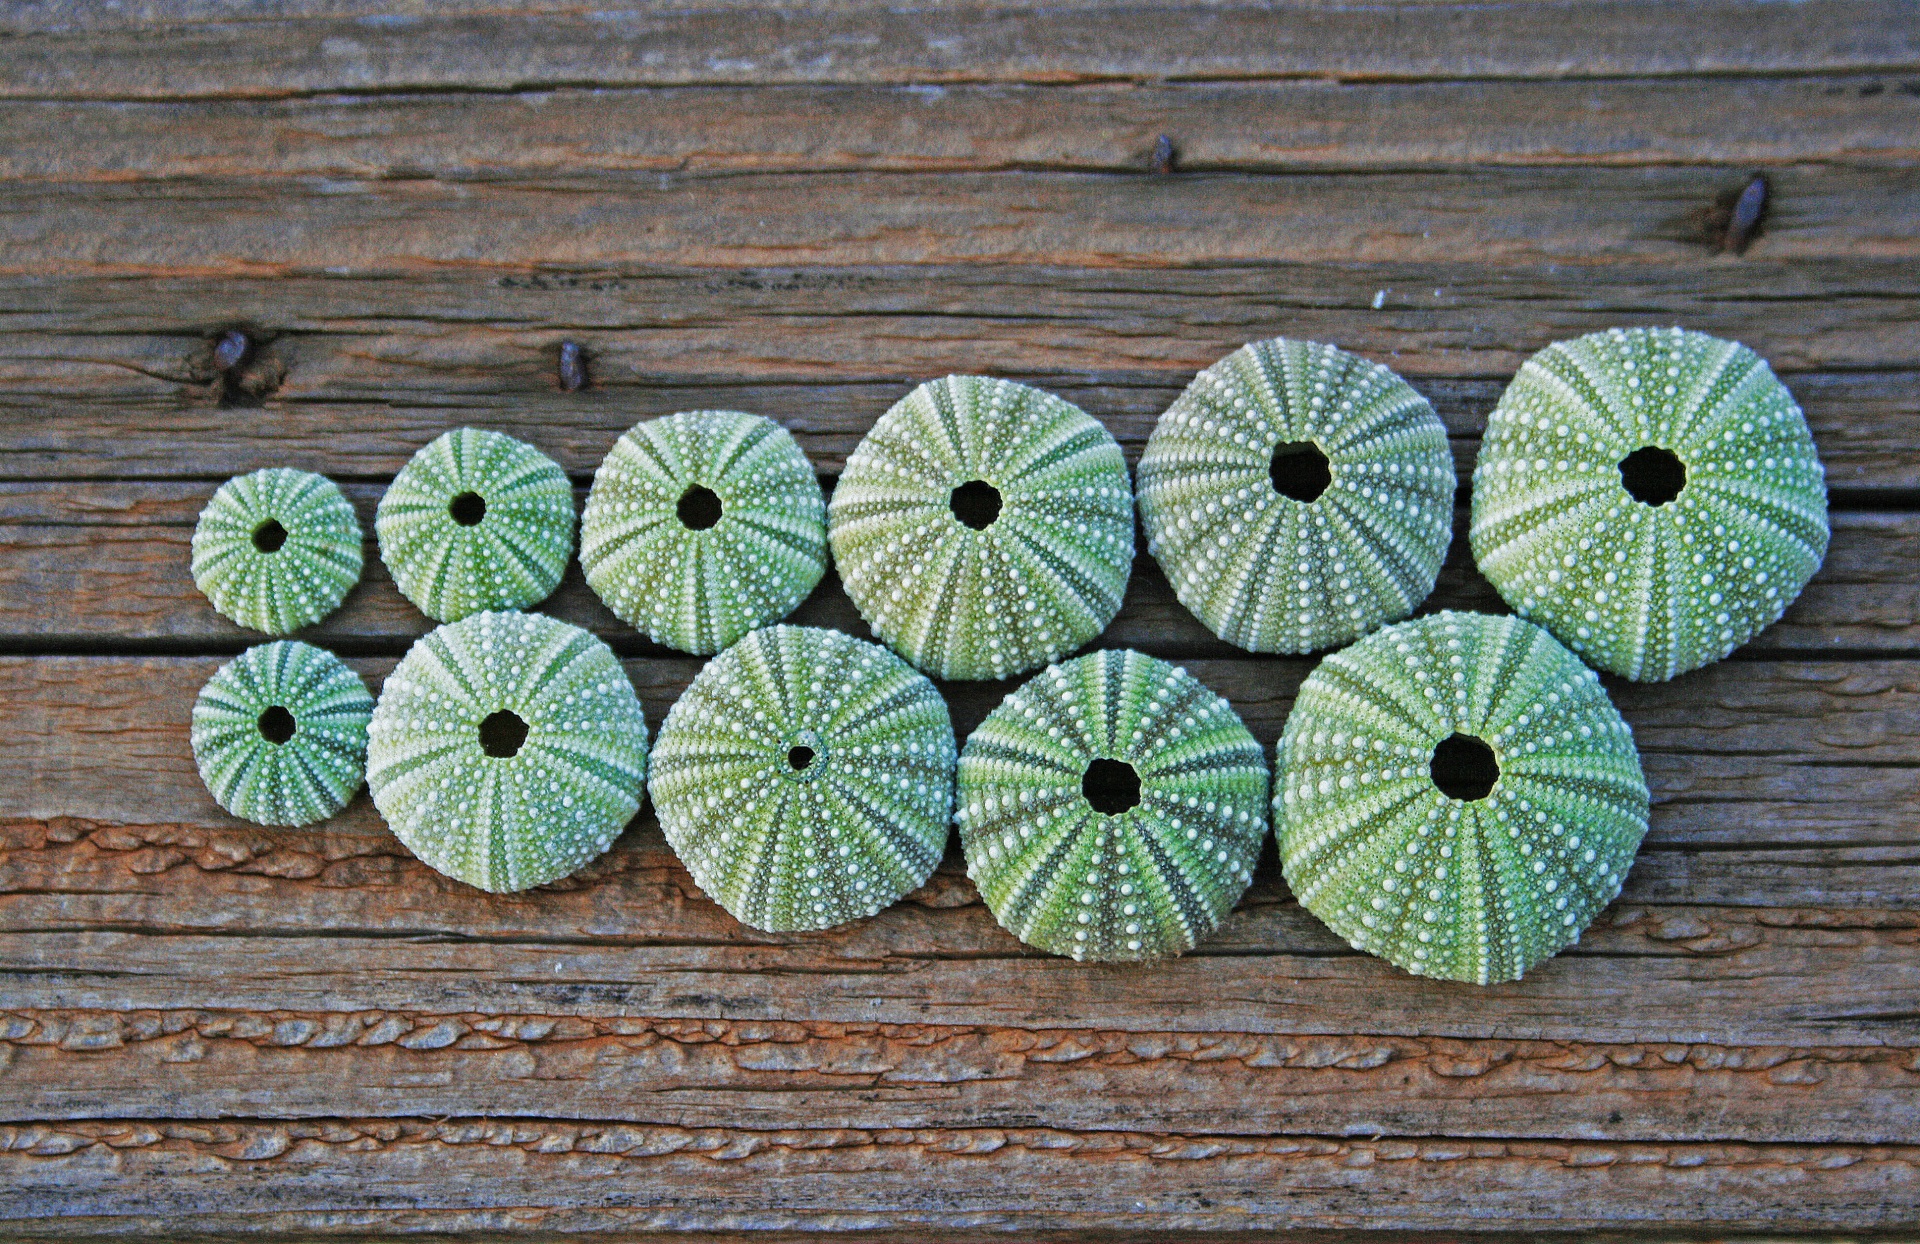 Green Sea Urchin Shells